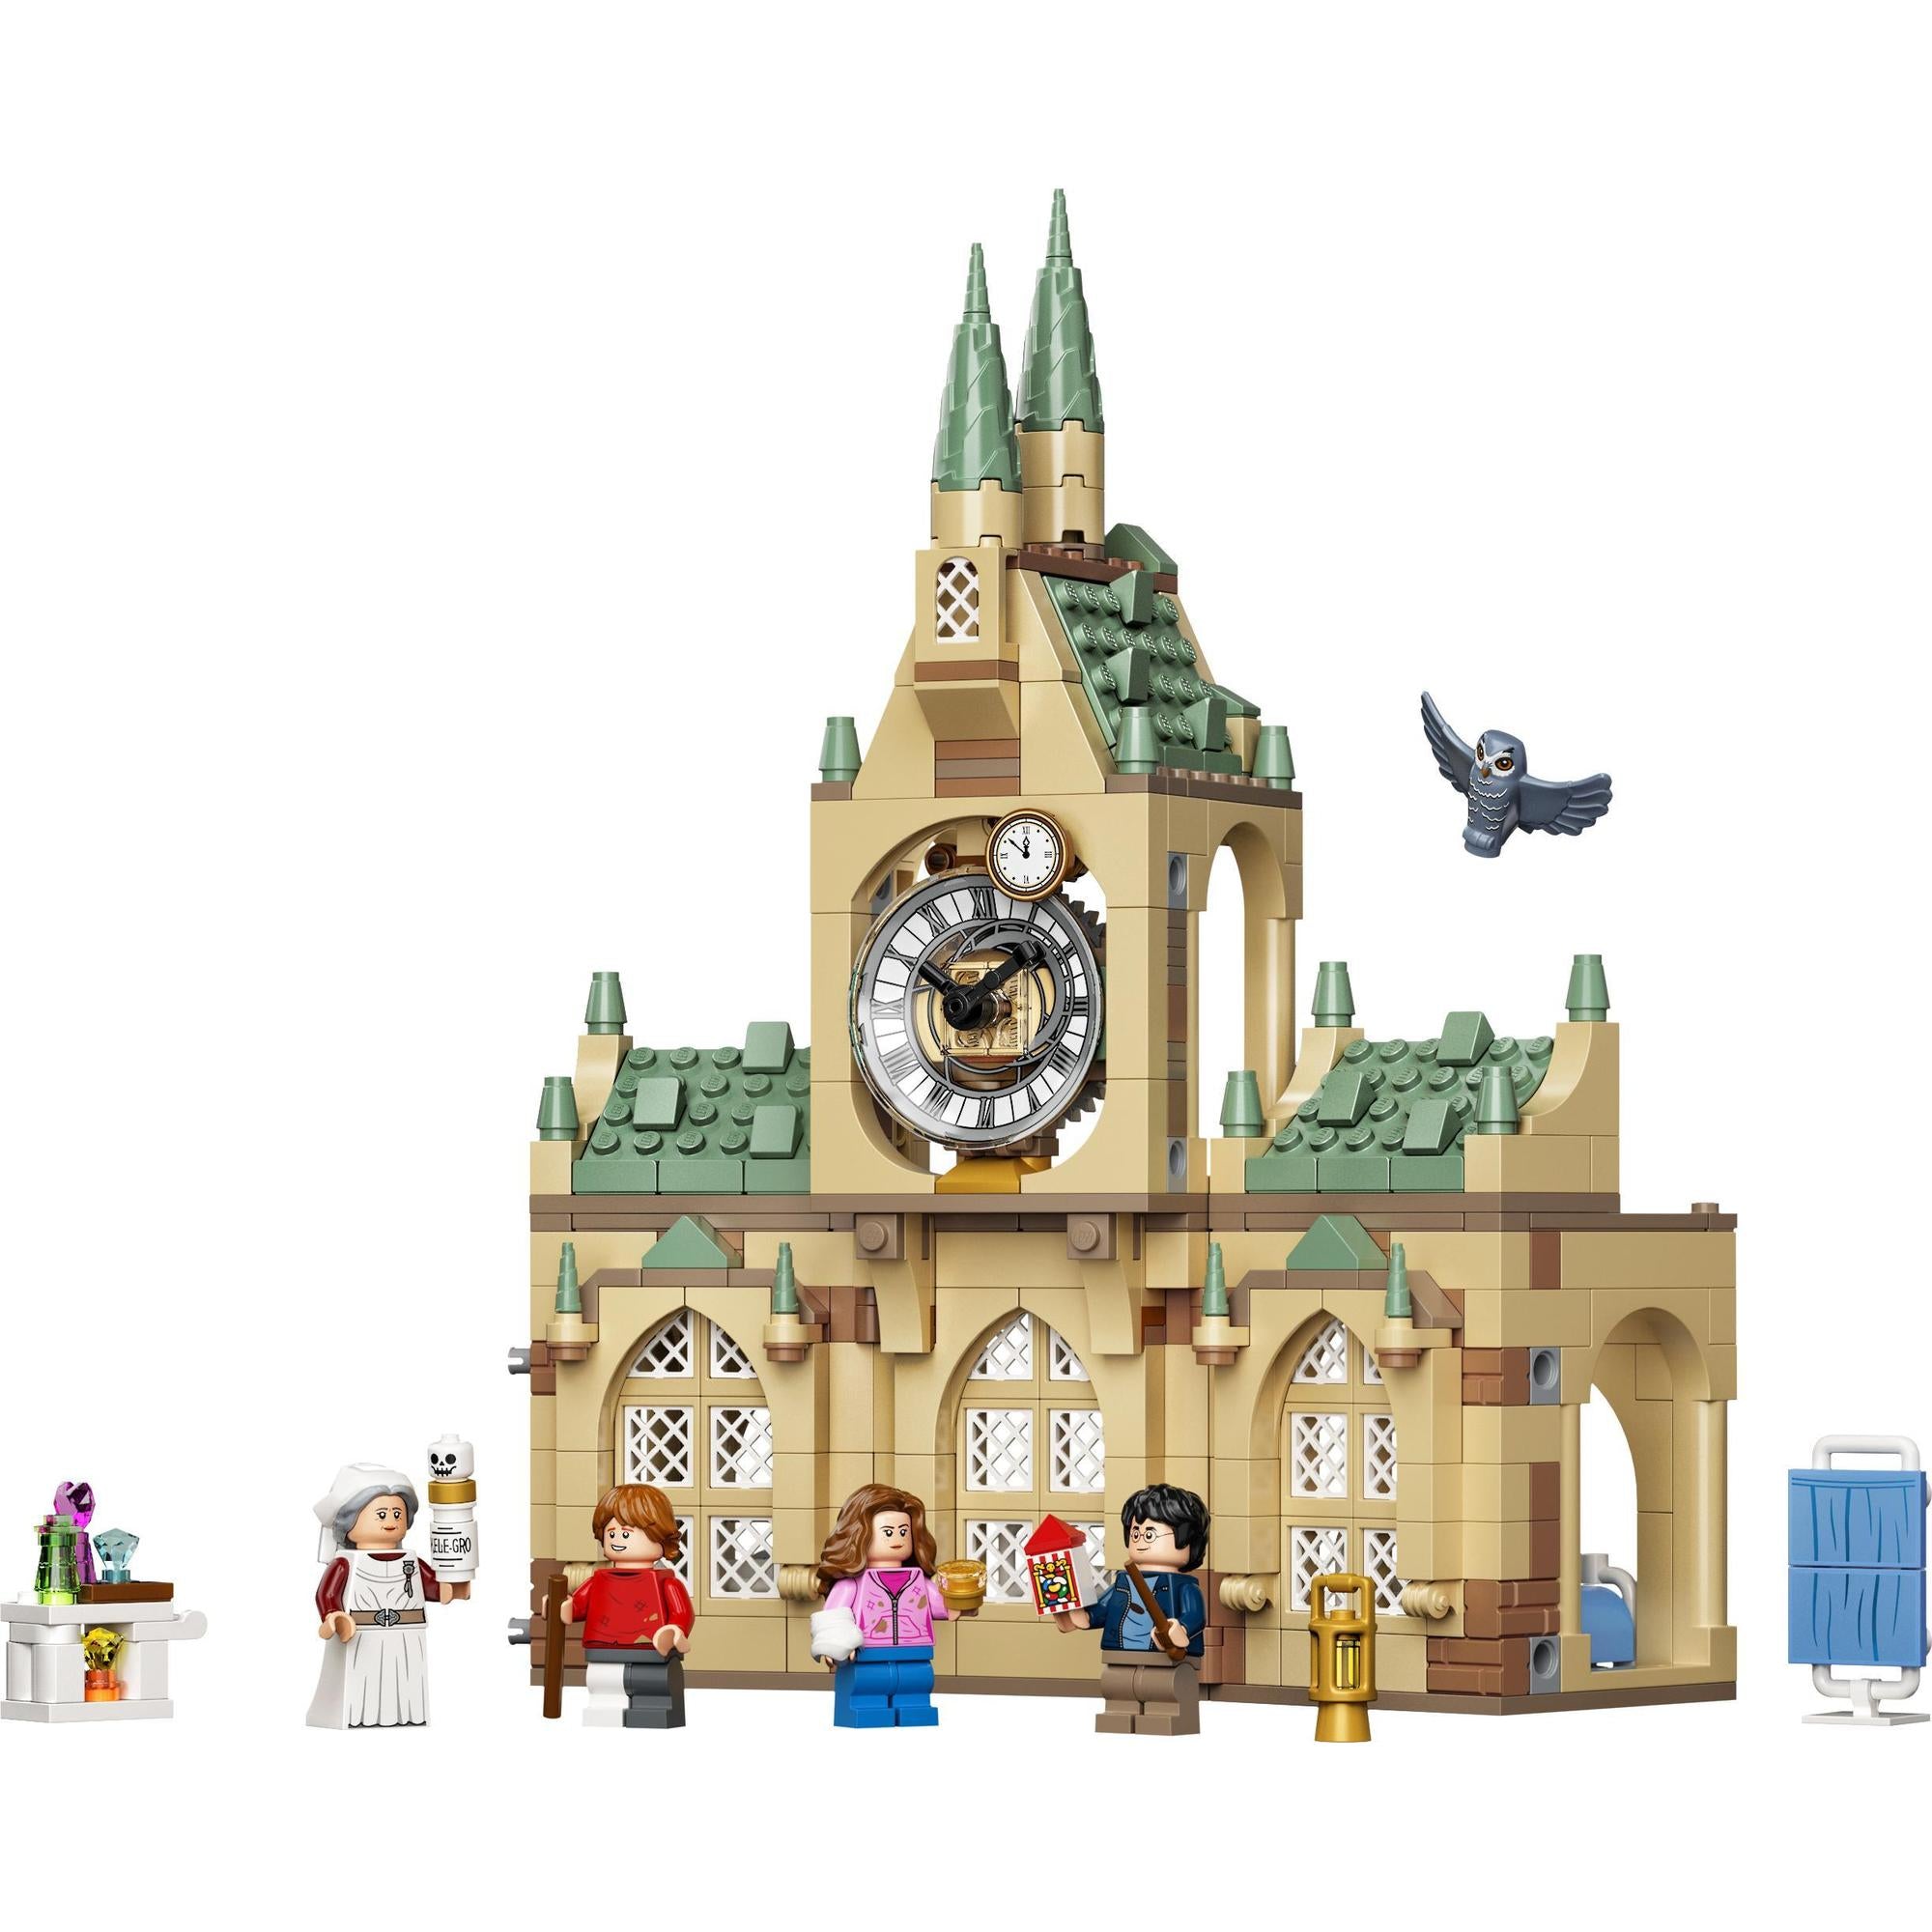 LEGO® | 76398 | Hogwarts Krankenflügel